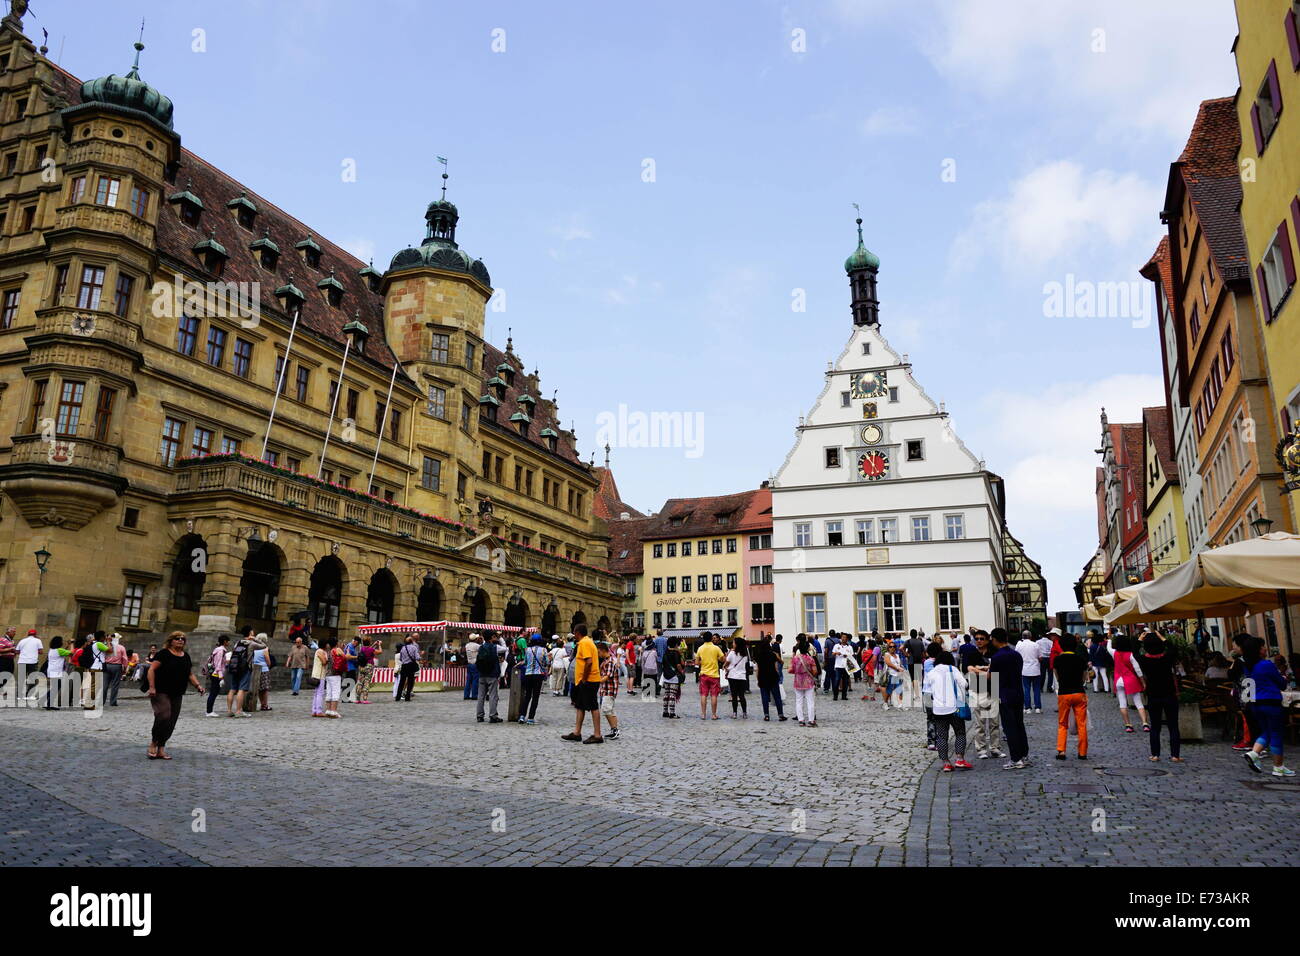 The market square in Rothenburg ob der Tauber, UNESCO Romantic Road, Franconia, Bavaria, Germany, Europe Stock Photo